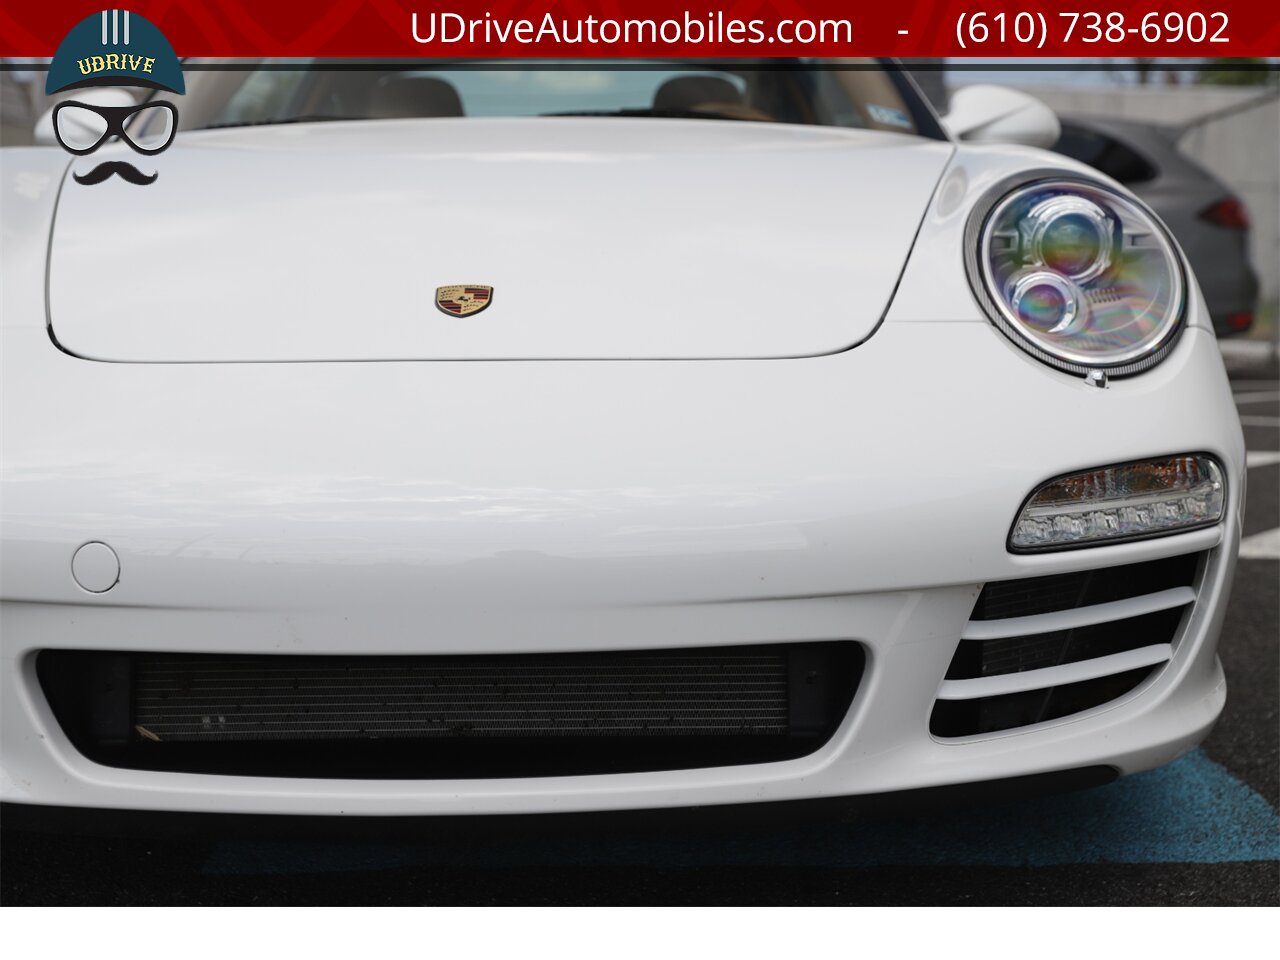 2011 Porsche 911 S 997.2 PDK Chrono Rare Color 21k Miles Sprt Susp  Diff Lock Vent Seats $113 MSRP - Photo 11 - West Chester, PA 19382